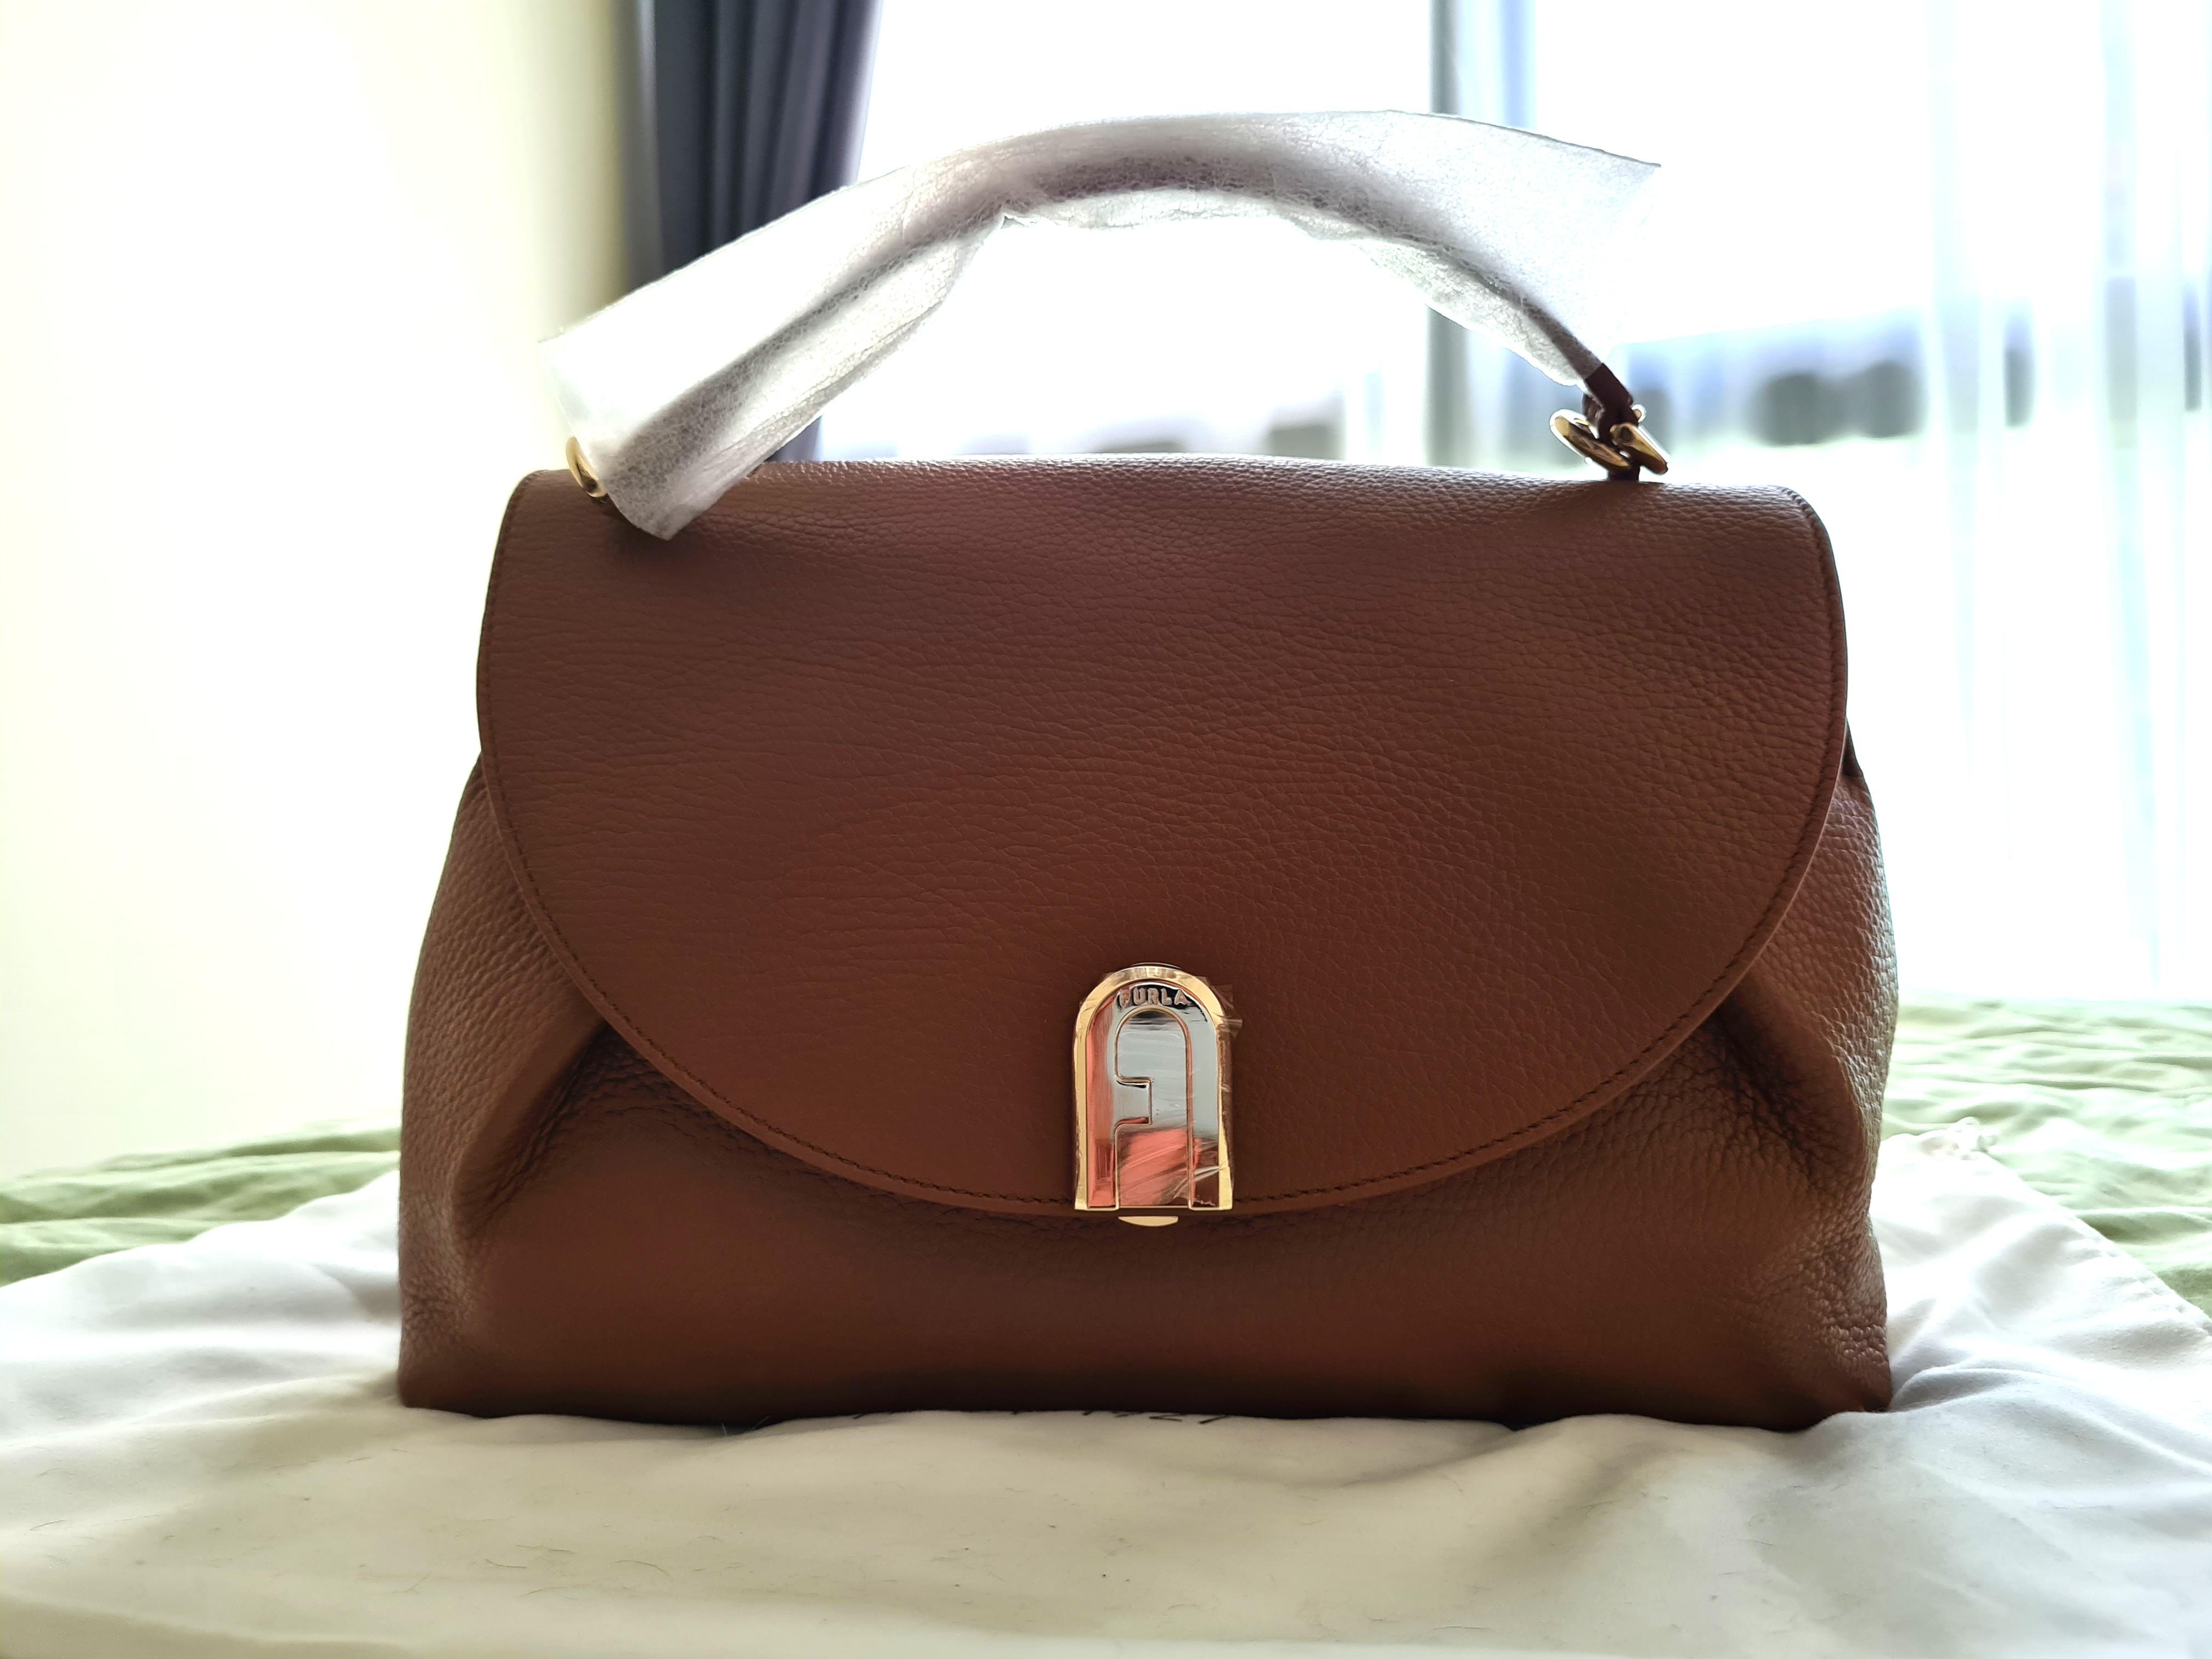 Furla Handbag With Top Handle Sleek M Women S Fashion Bags Wallets Handbags On Carousell